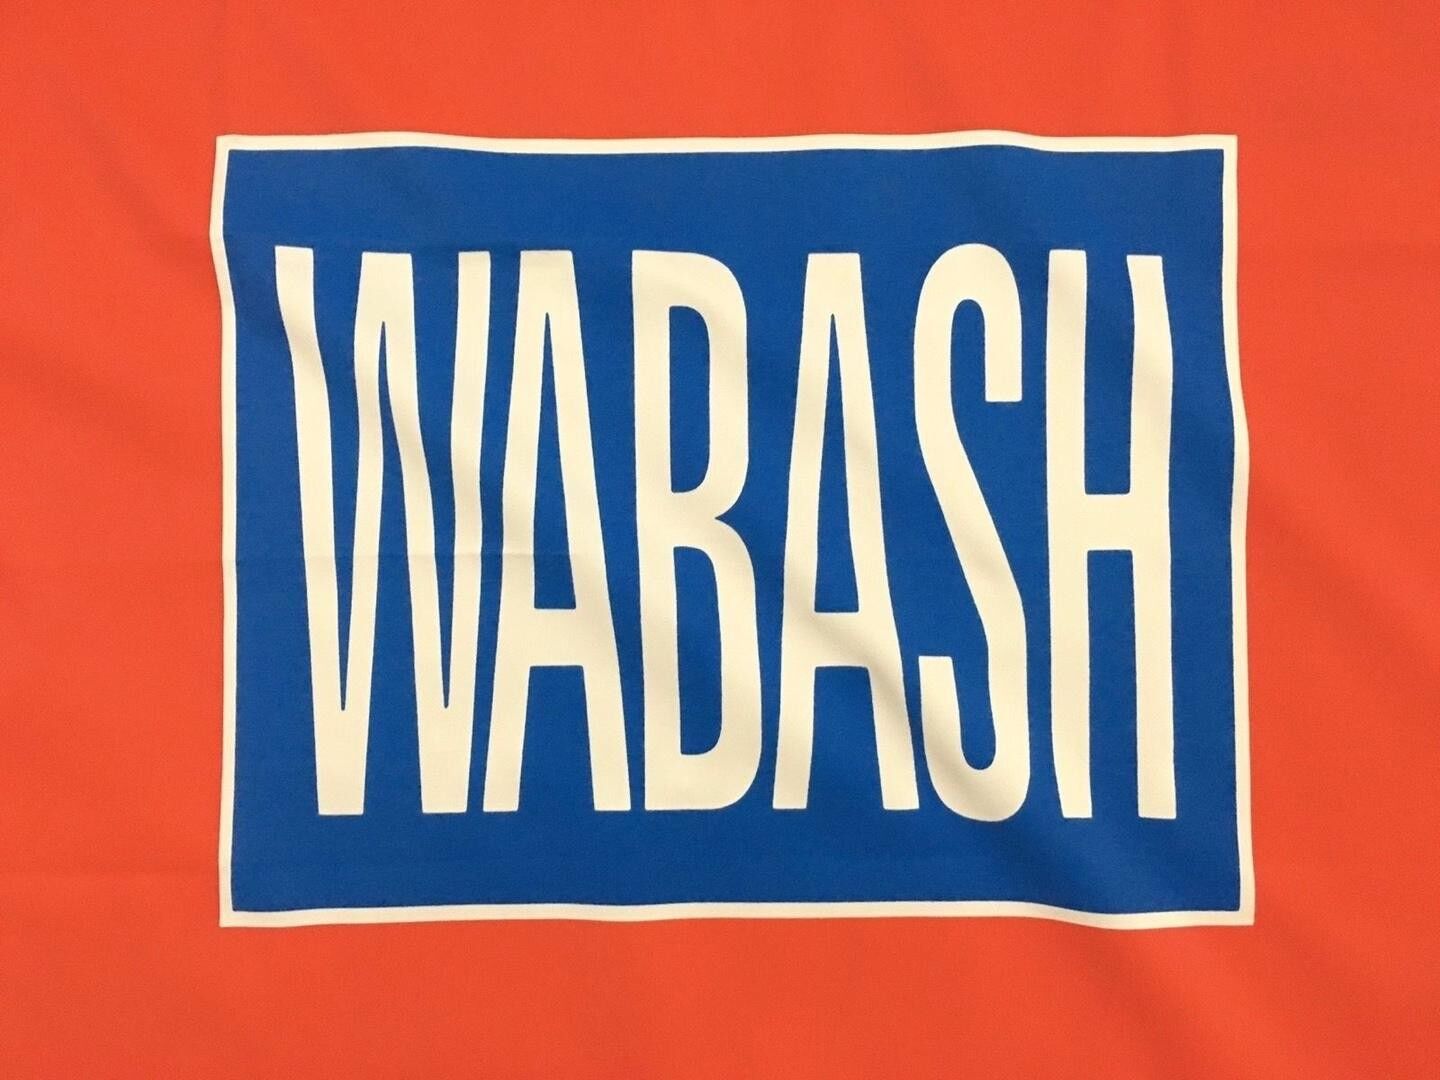 WABASH WAB Company Railroad Flag 2’x3’ Made in USA